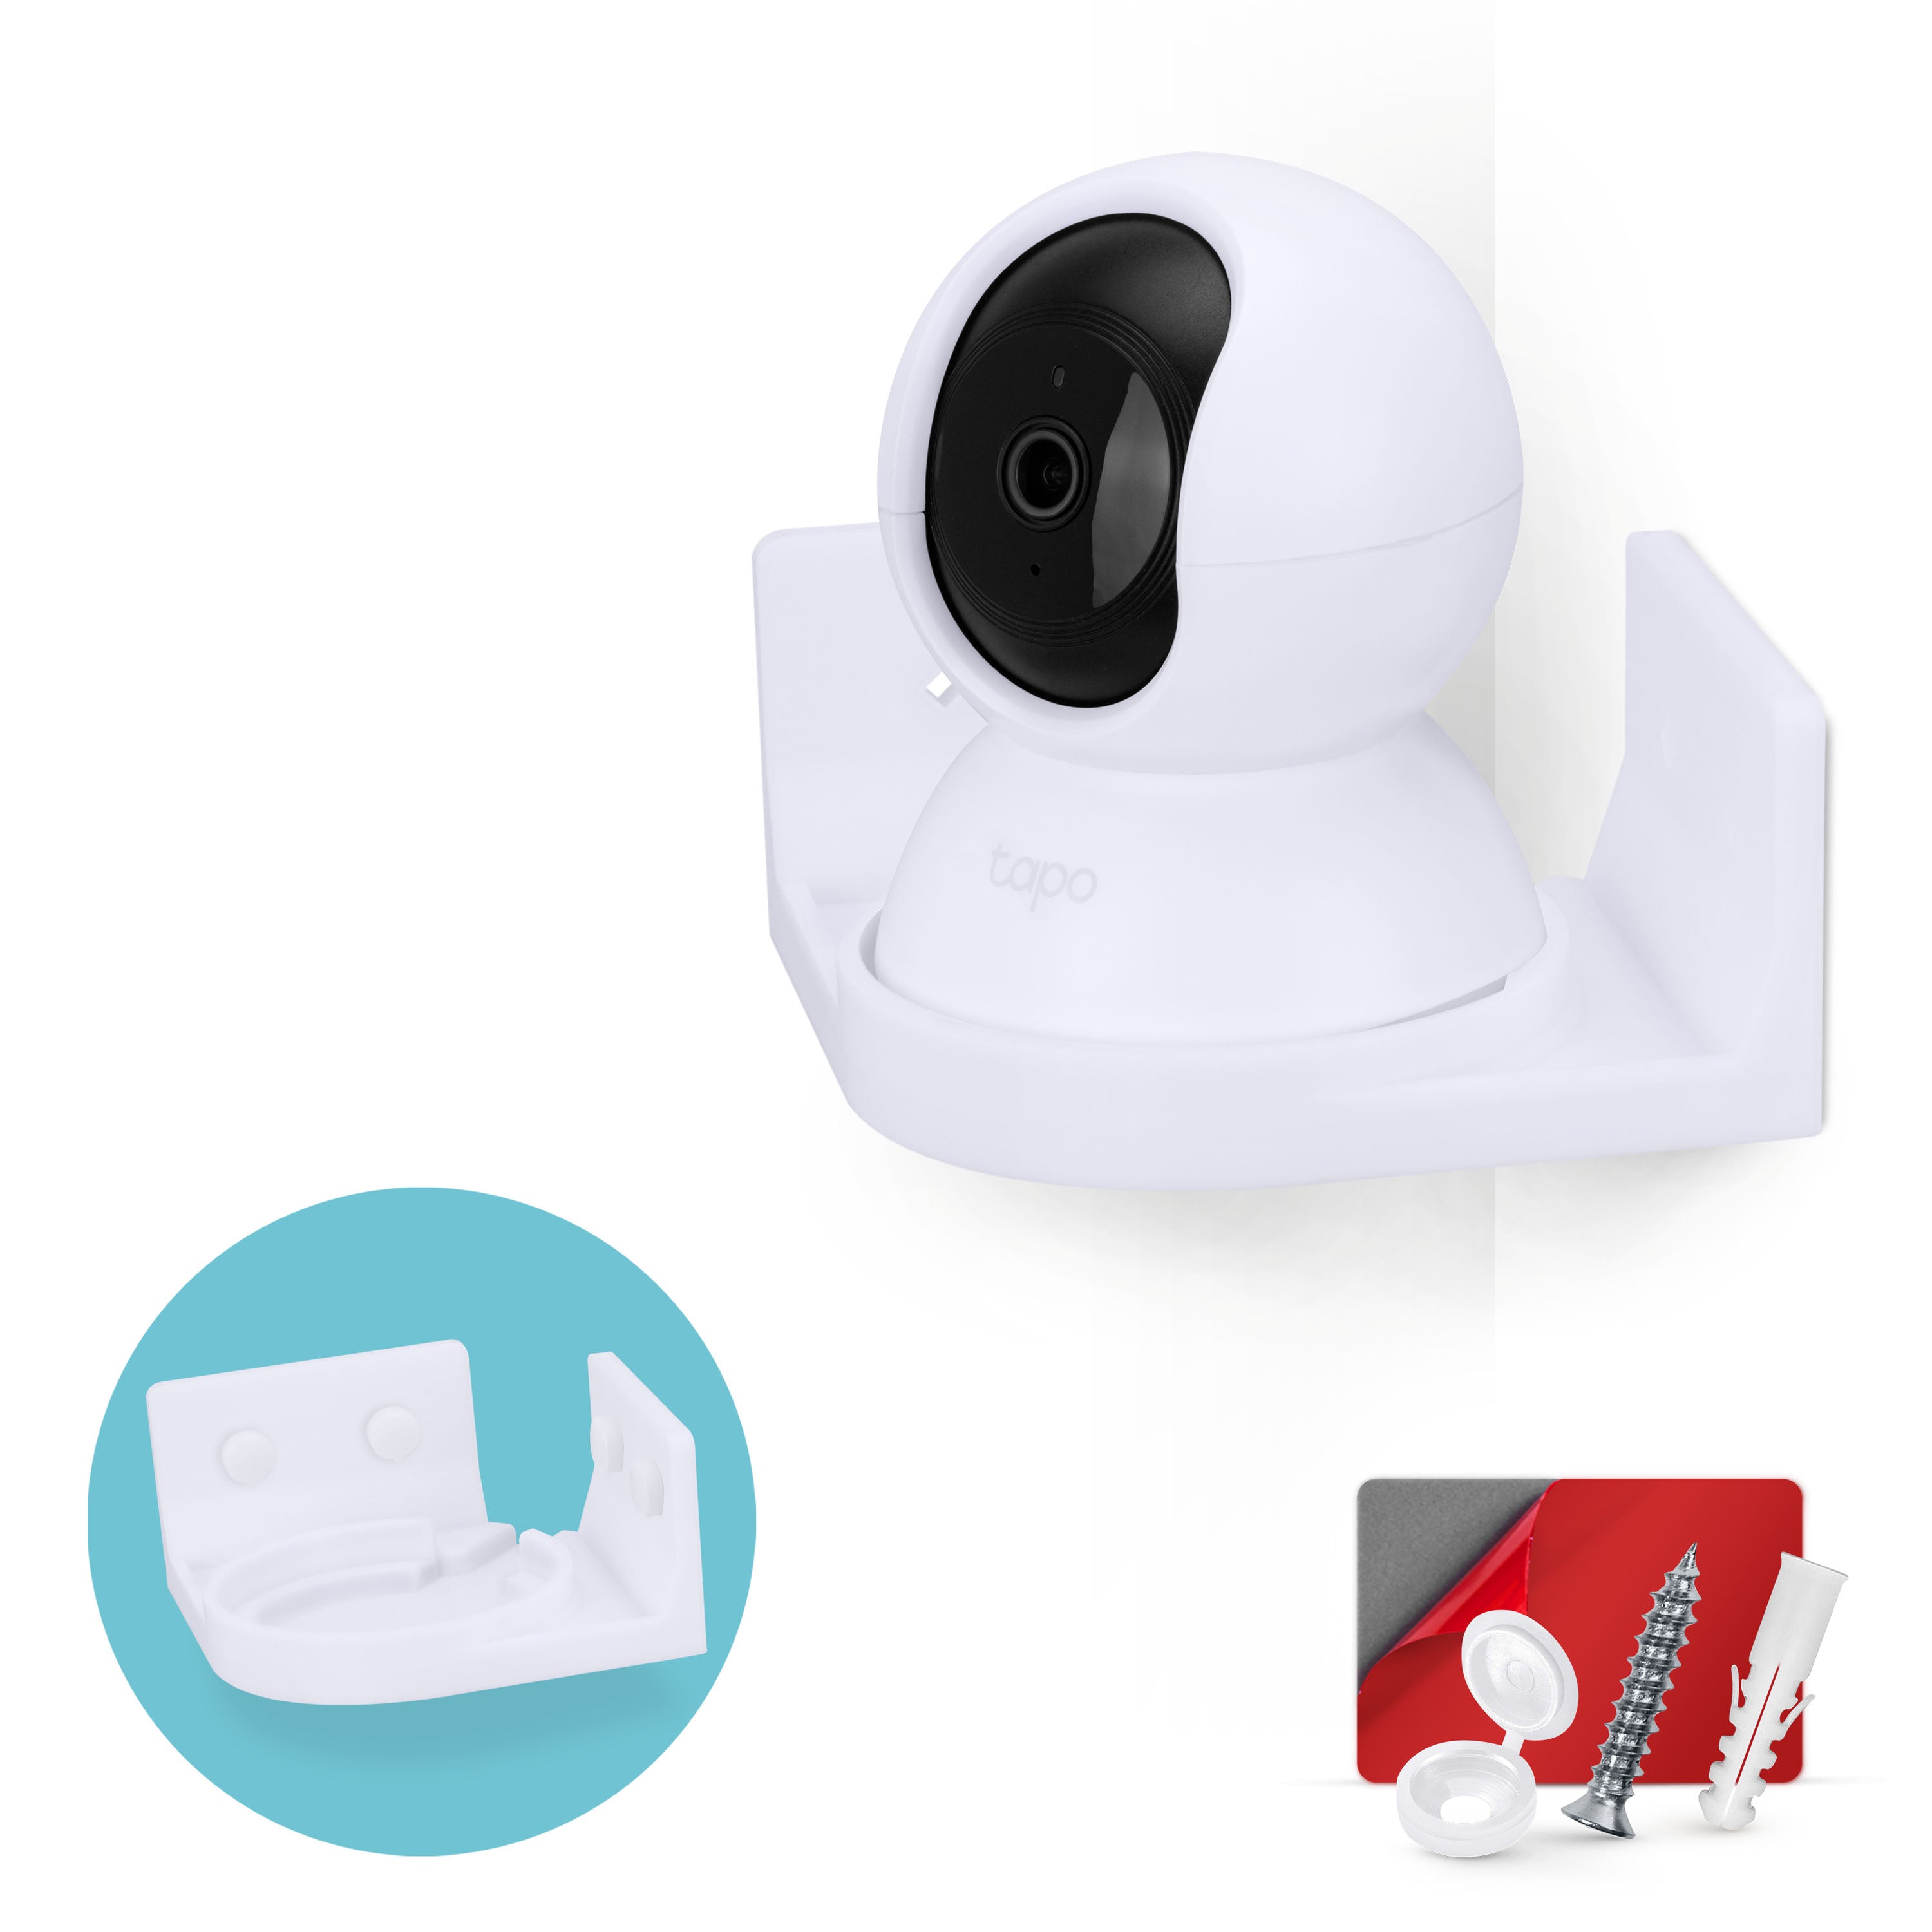 tp-link Tapo C210 Pan / Tilt Home Security Wi-Fi Camera Guía del usuario